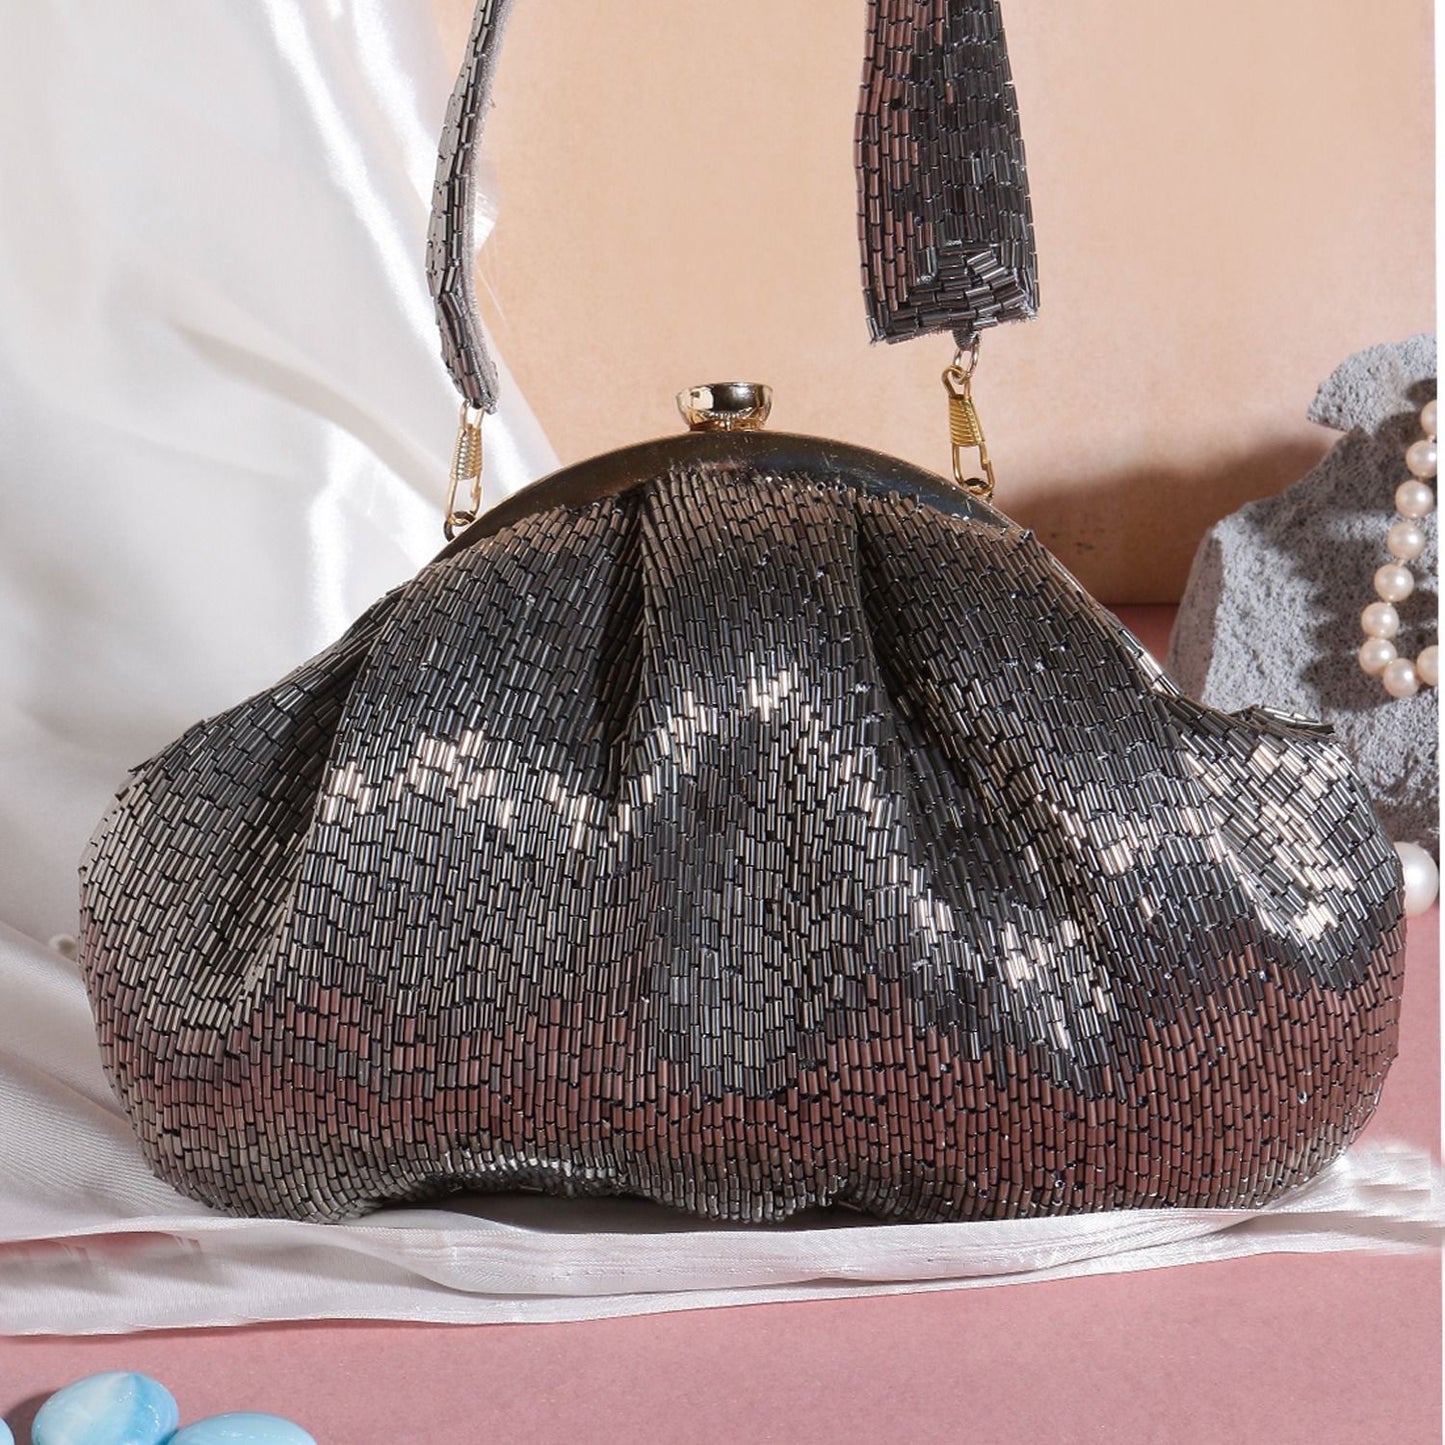 Illuminati inspired clutch bag handbags